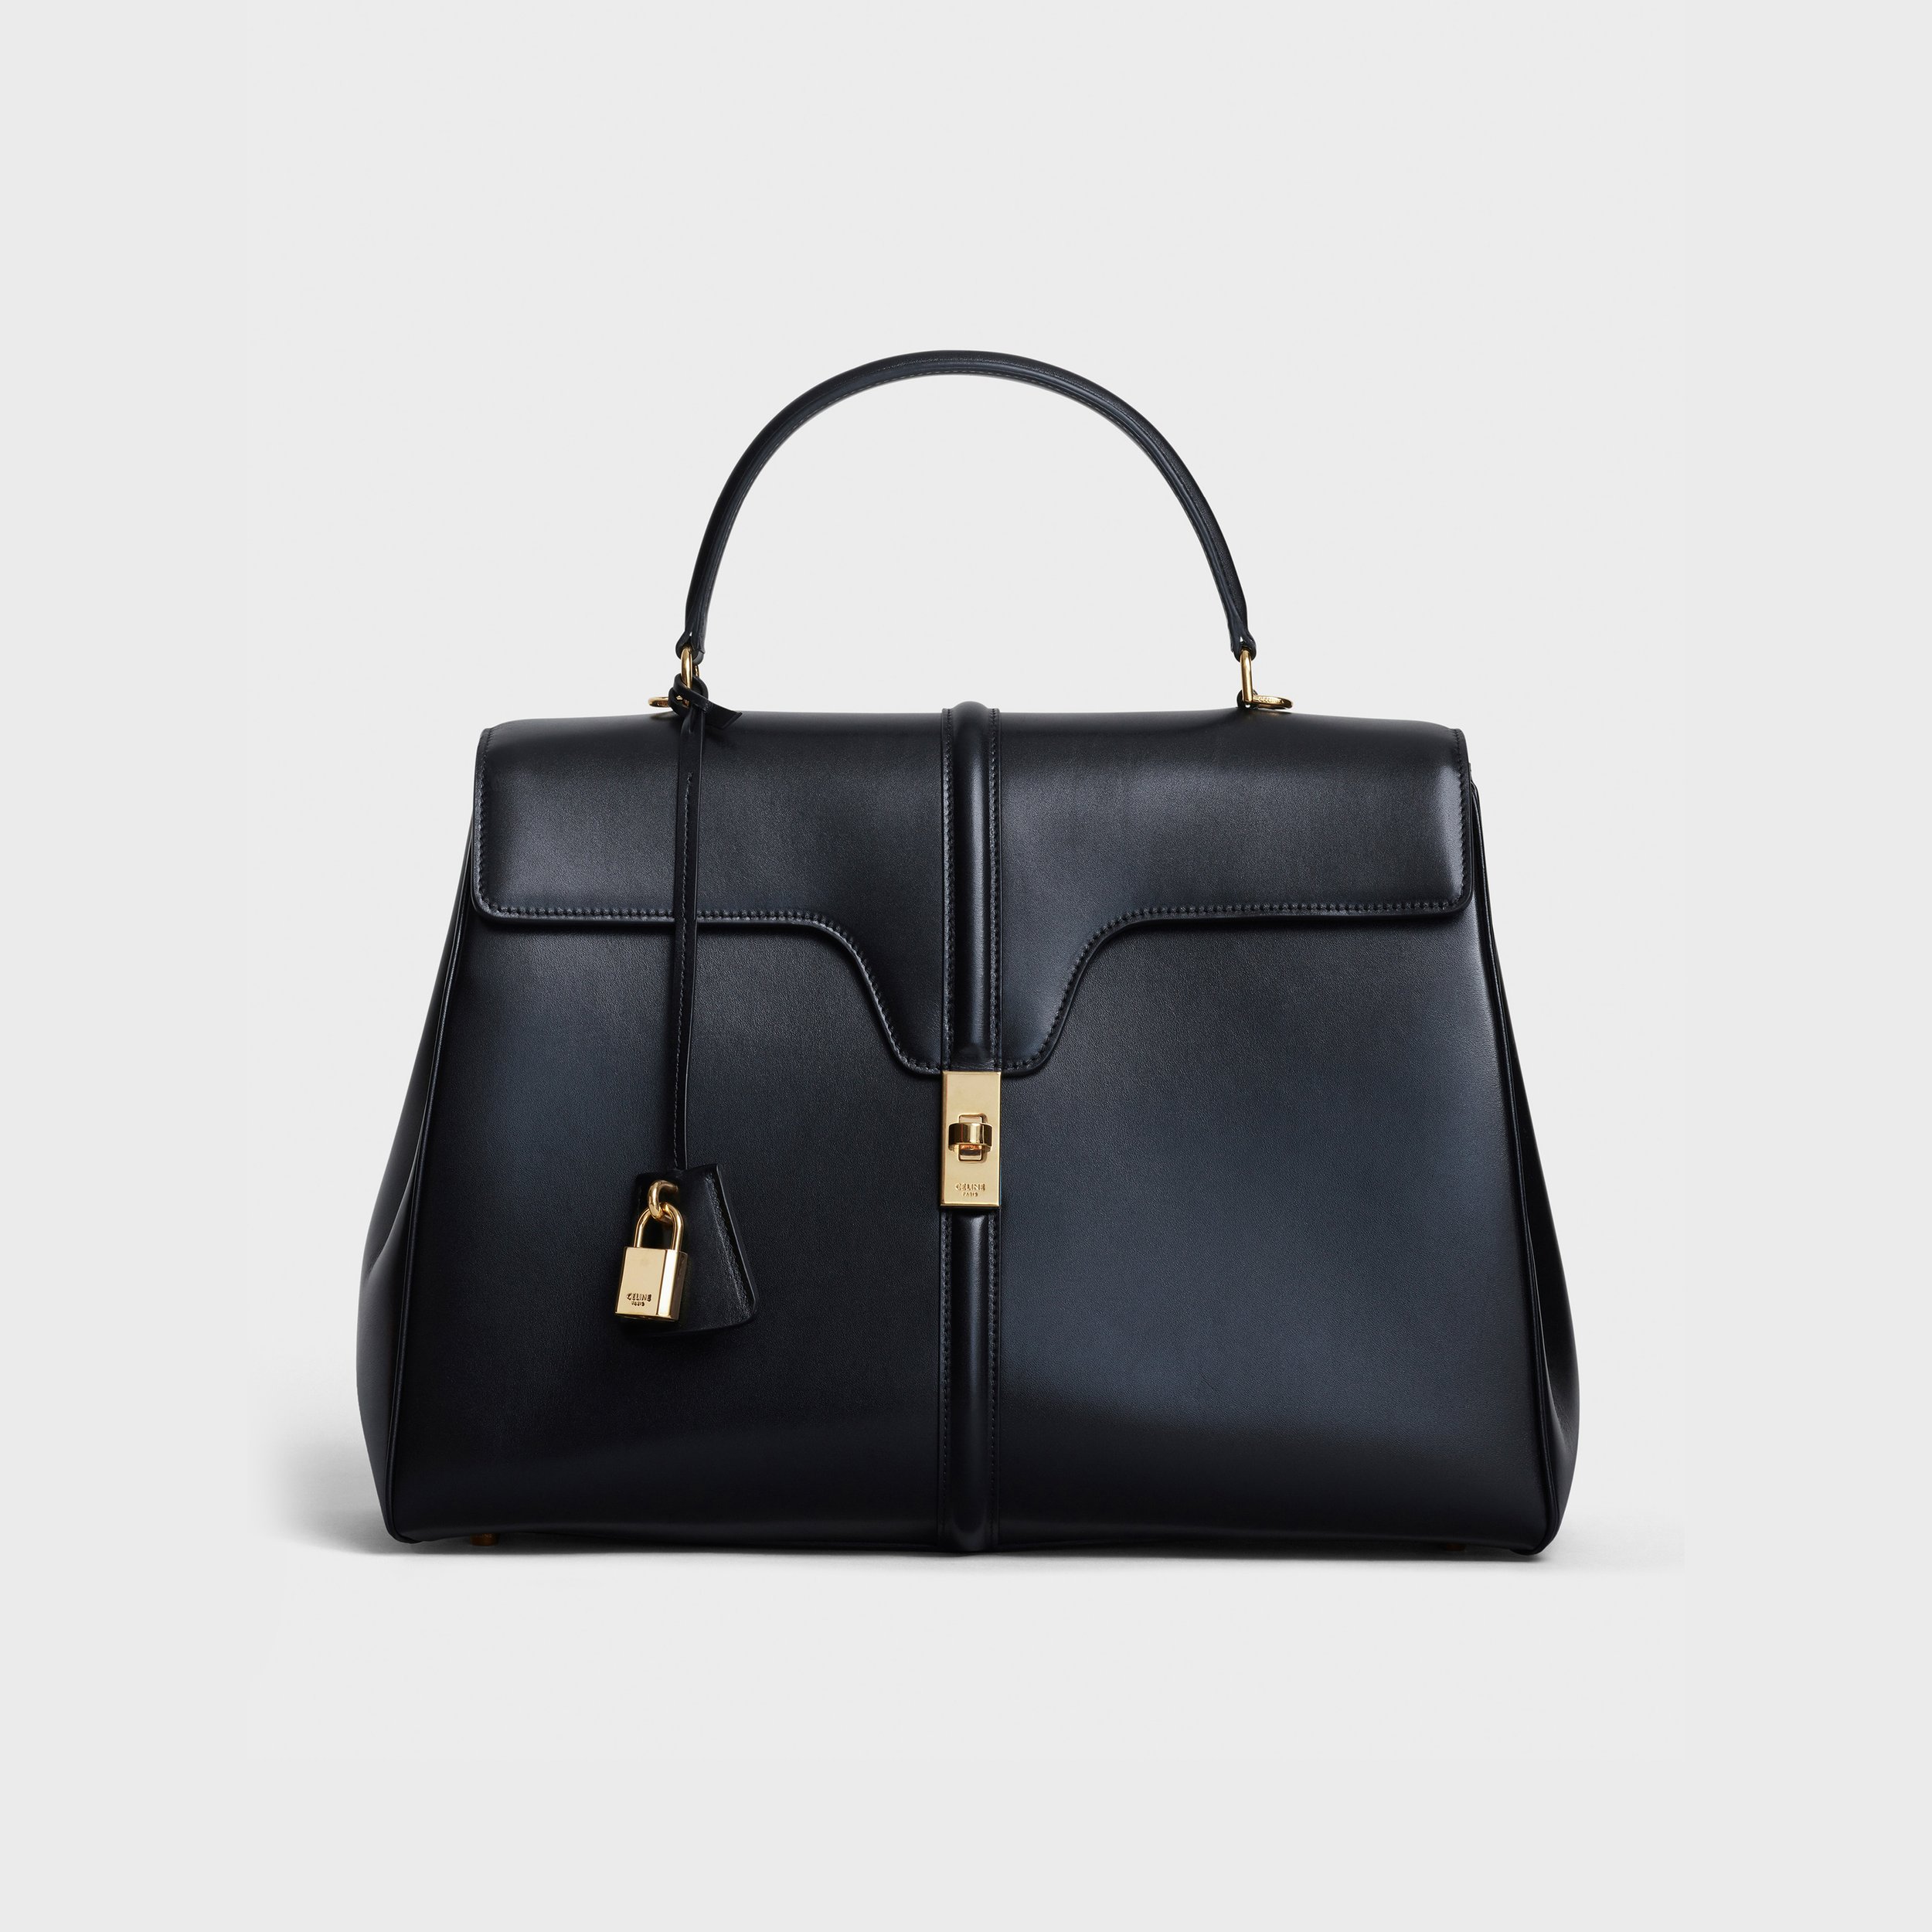 Céline Large 16 Bag in Black Satinated Calfskin Leather.jpg